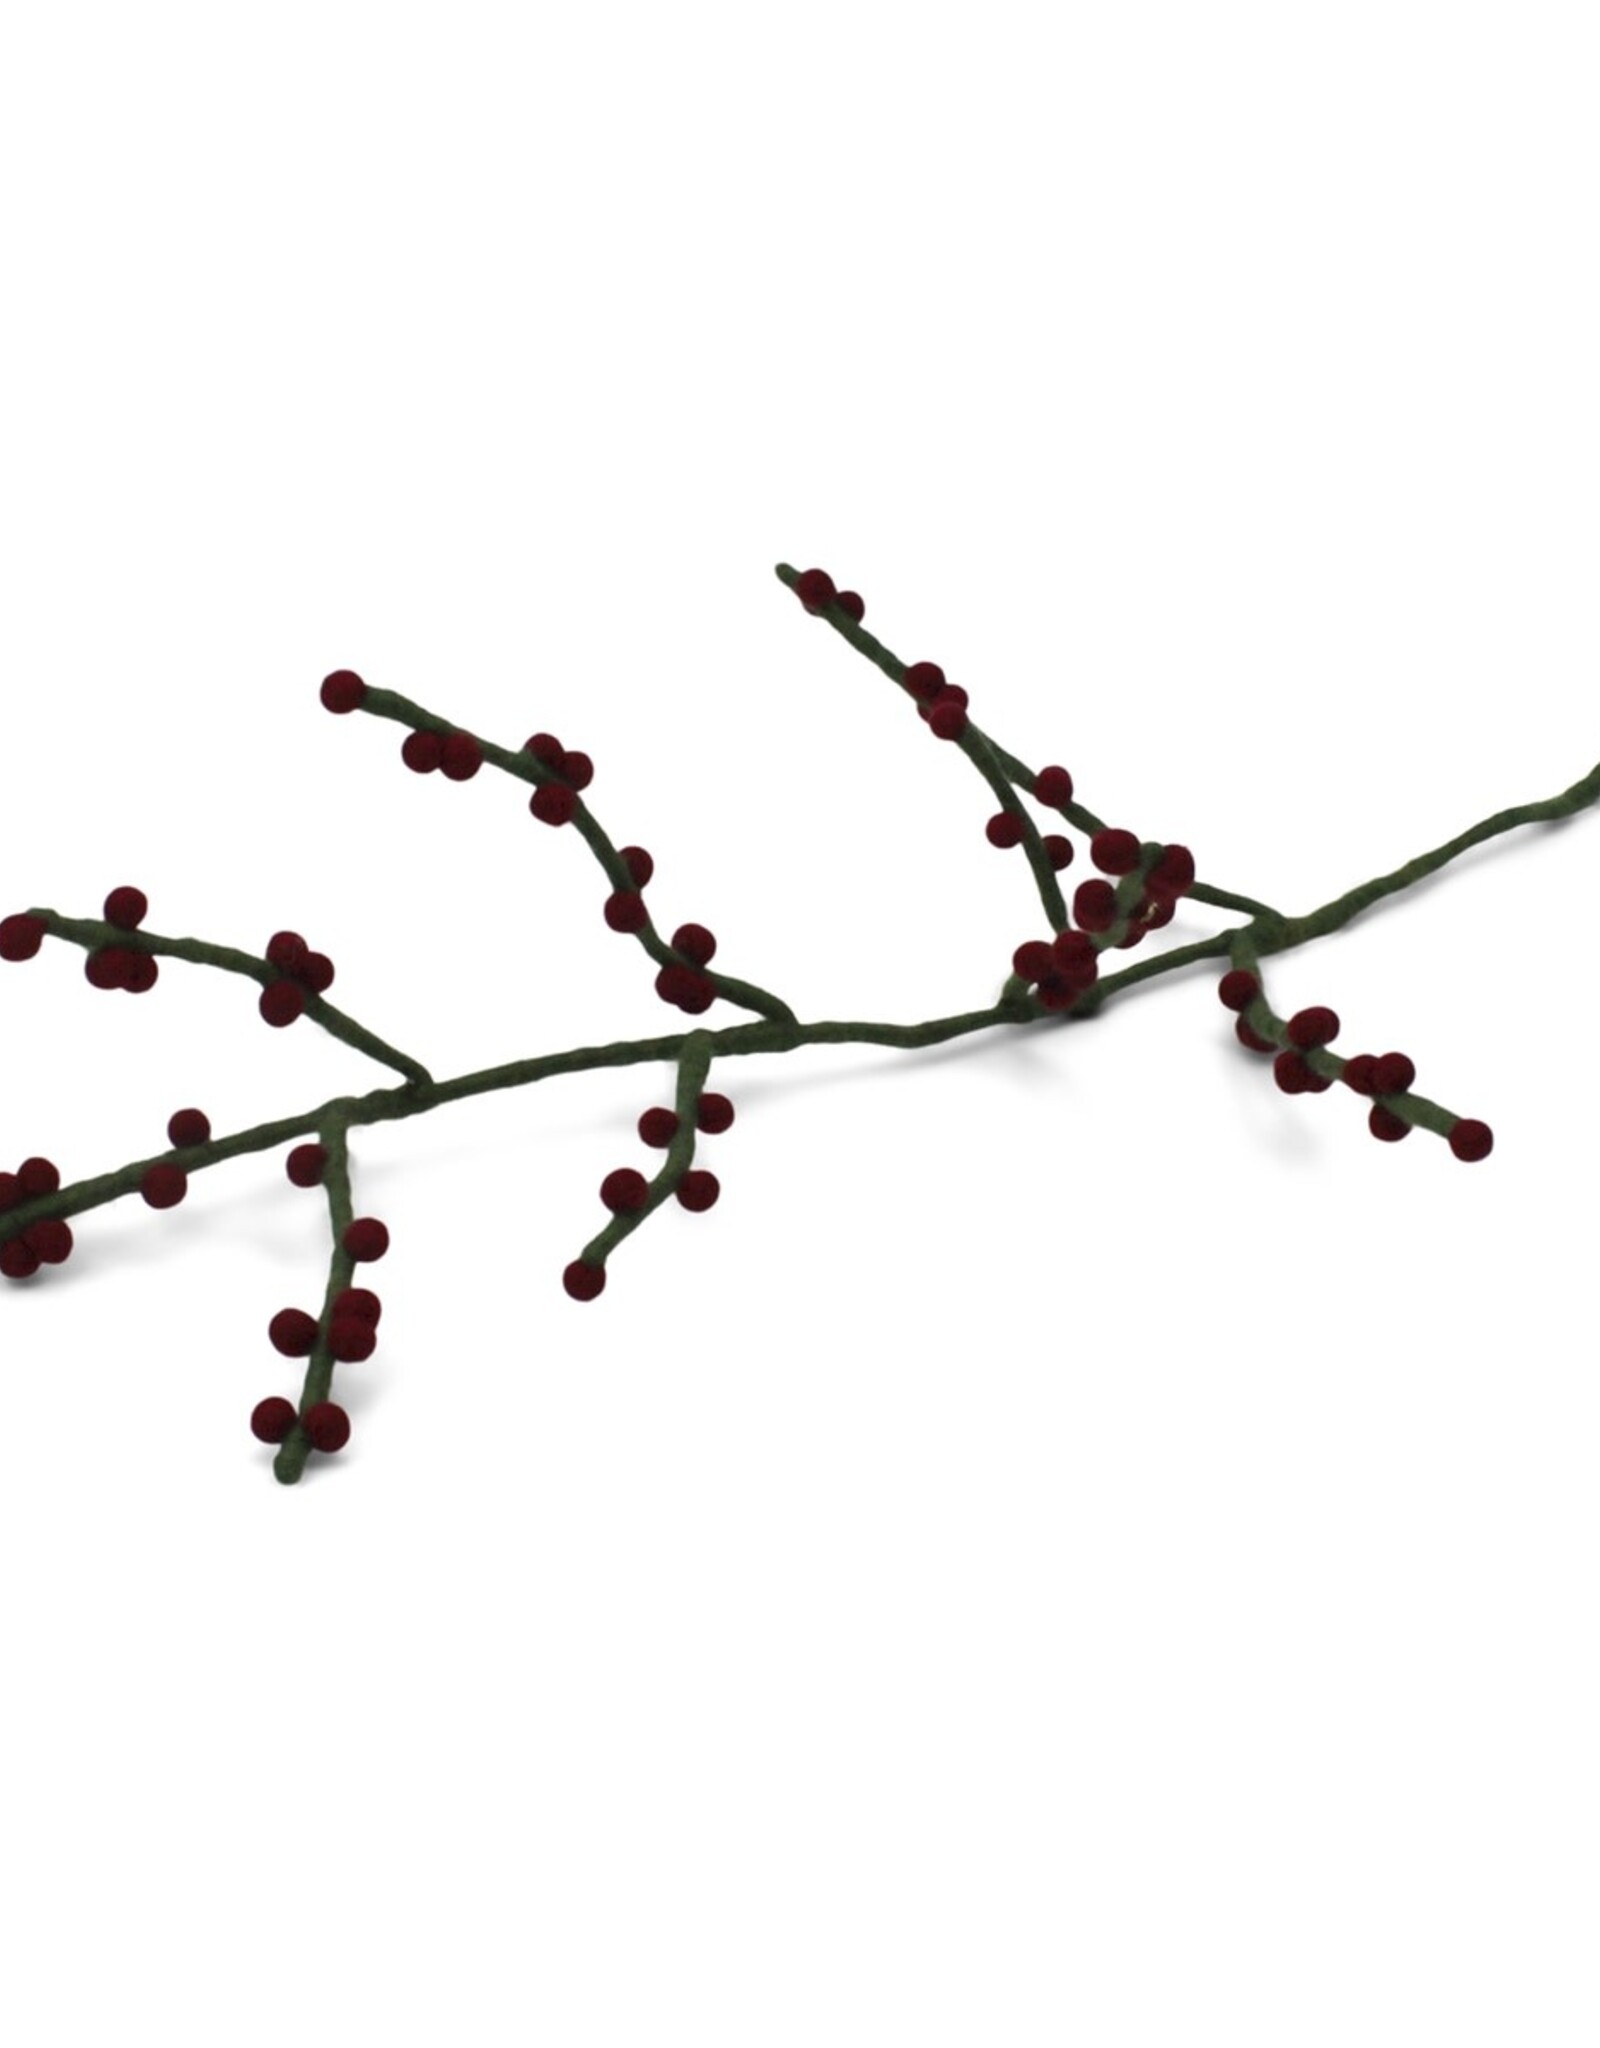 EGS EGS Fair Trade Felt Branch - Green w Dark Red Berries